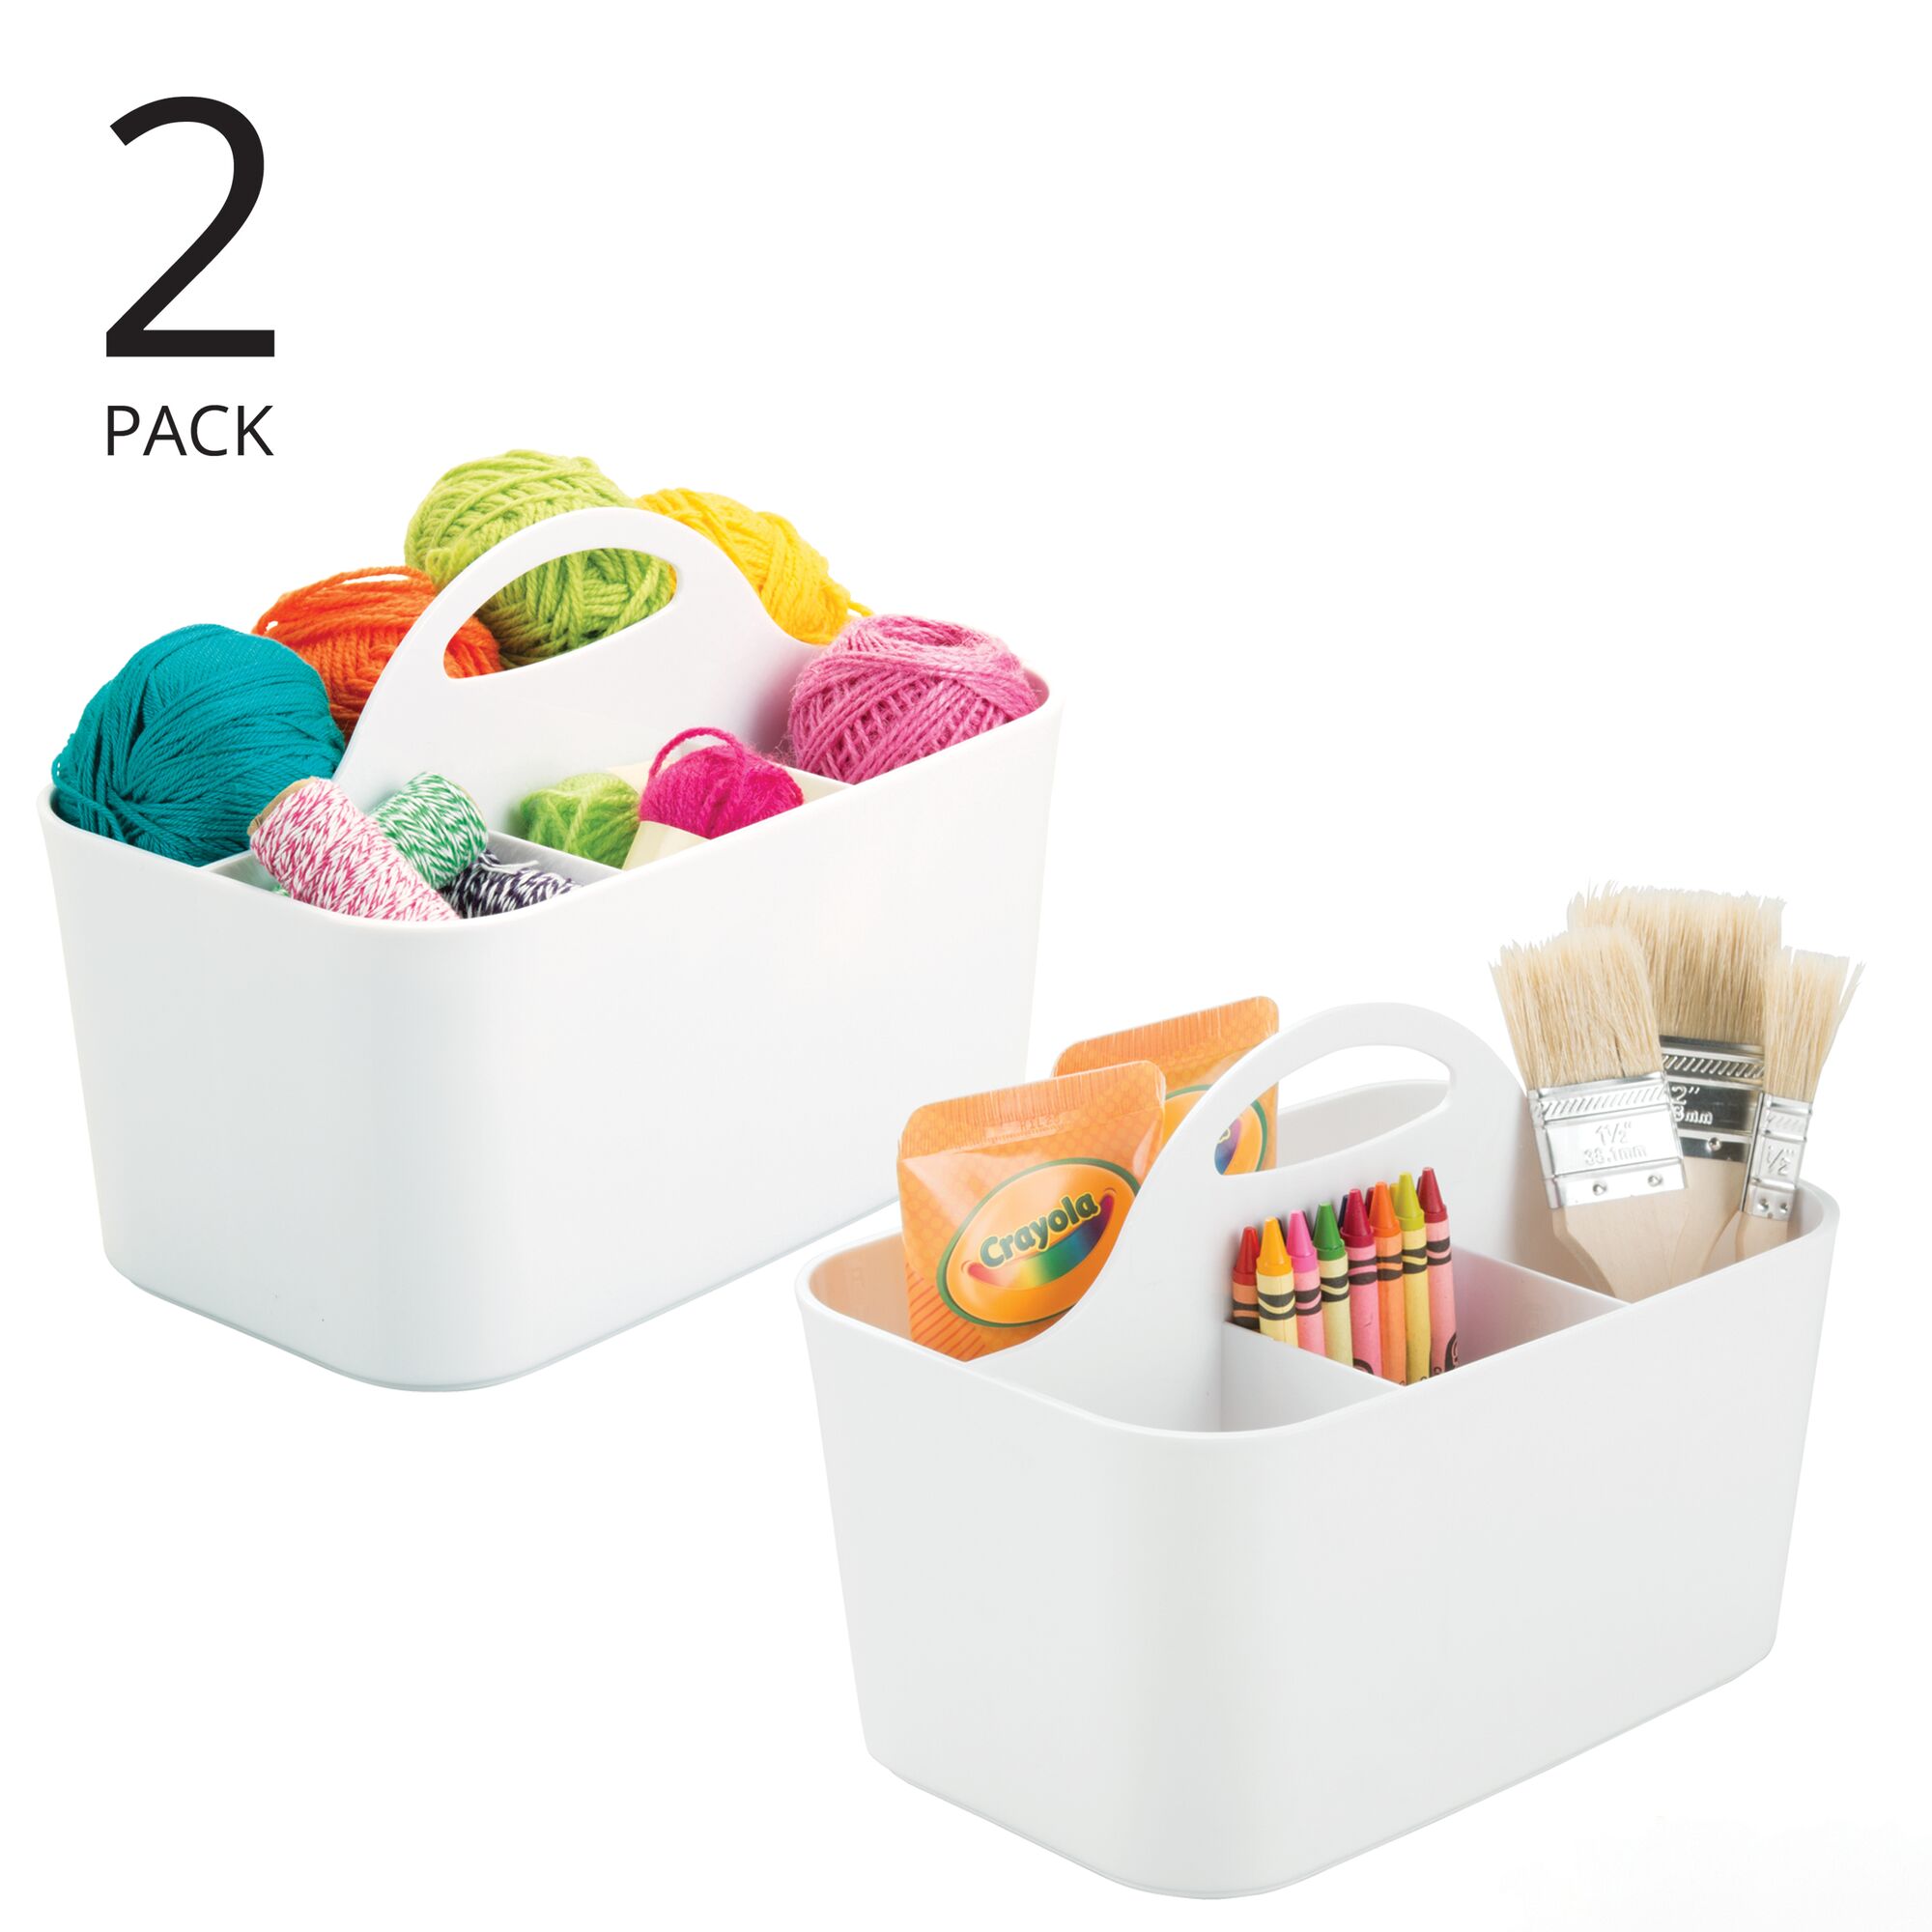 mDesign Plastic Sewing & Craft Storage Organizer Caddy Tote Bin - 2 Pack - White